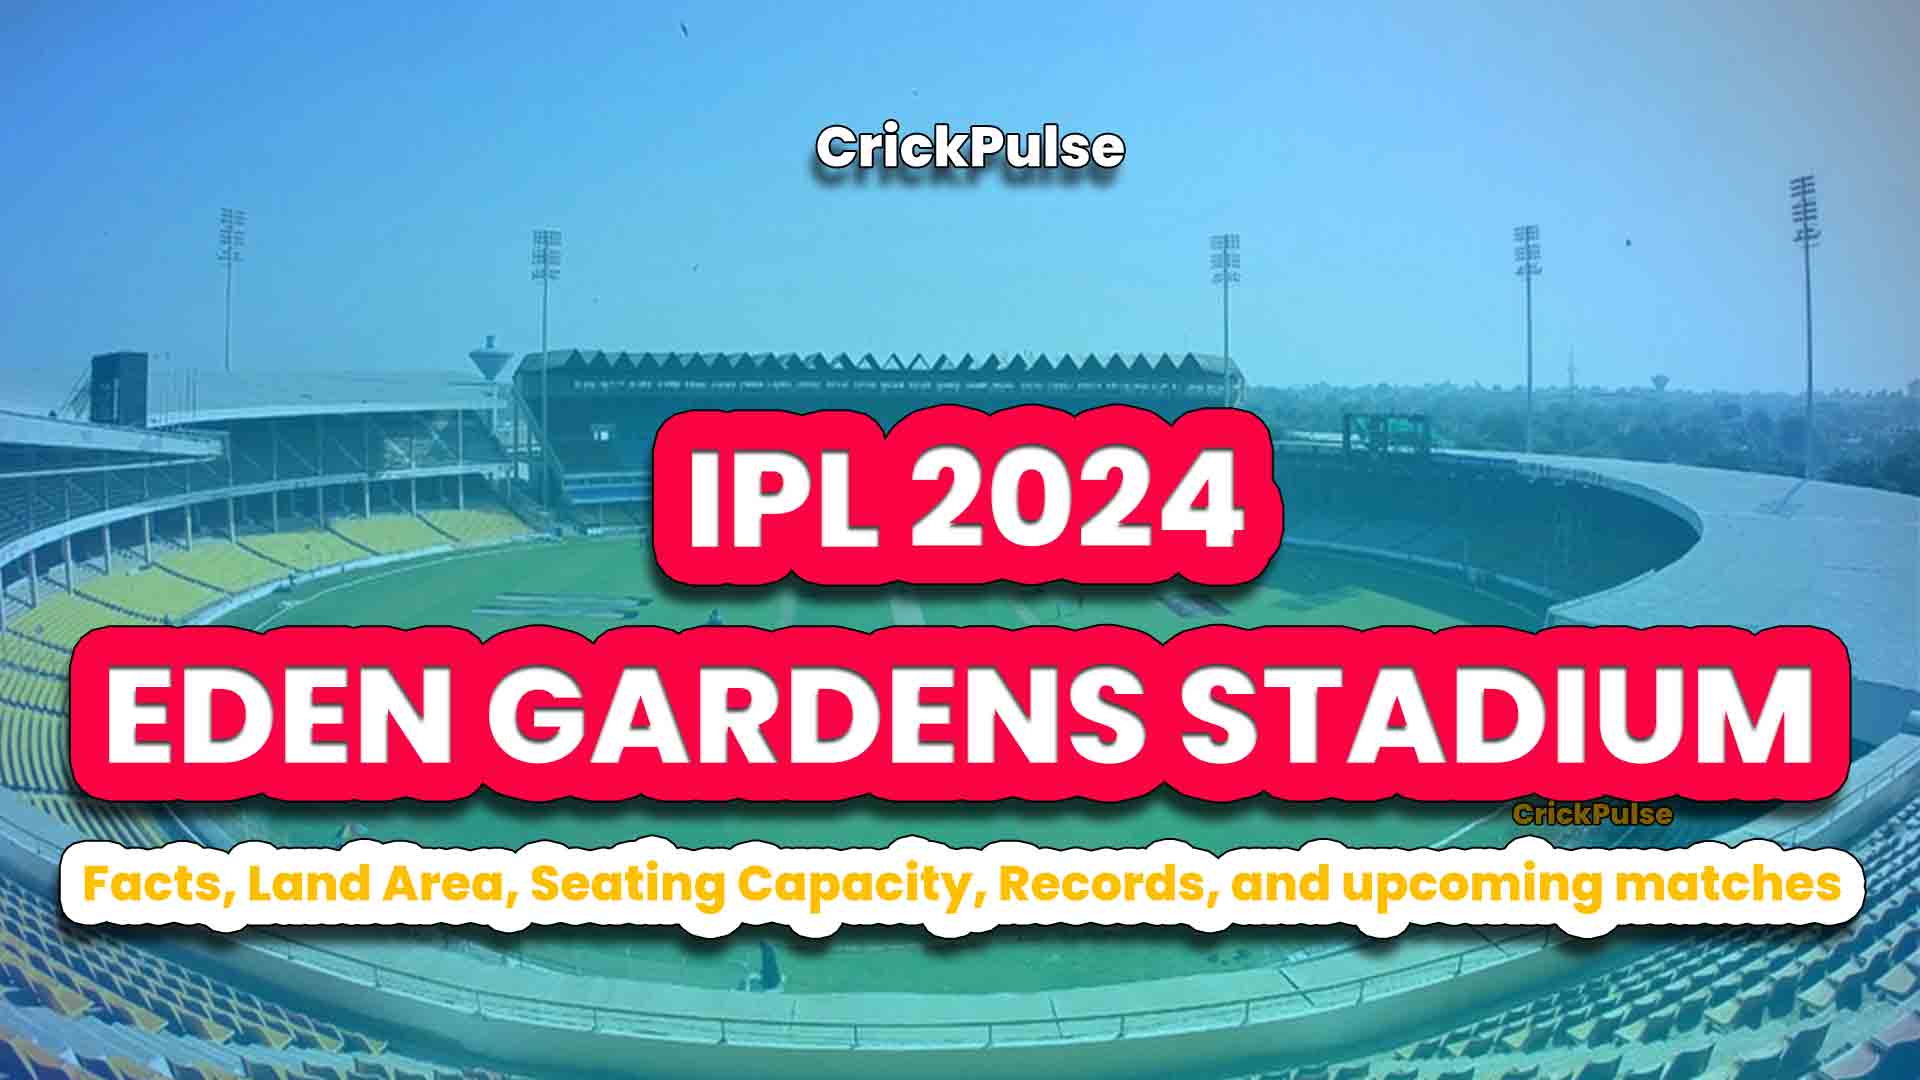 Eden-Gardens-Stadium-Seating-Capacity-Land-Area-IPL-Eden-Garden-records-IPL-2024-upcomming-matches-at-eden-garden.